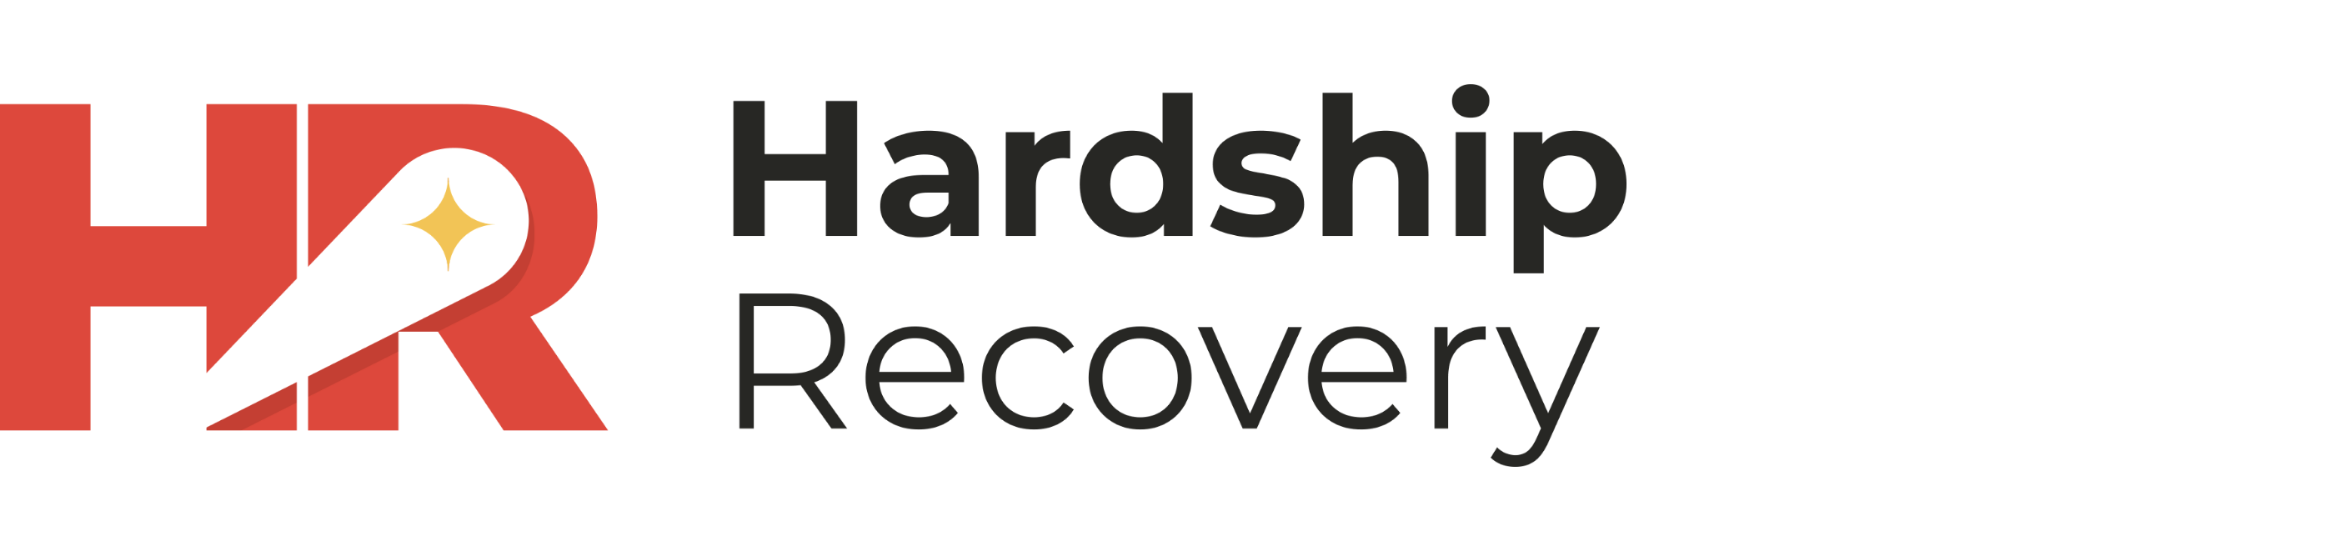 Hardship Recovery